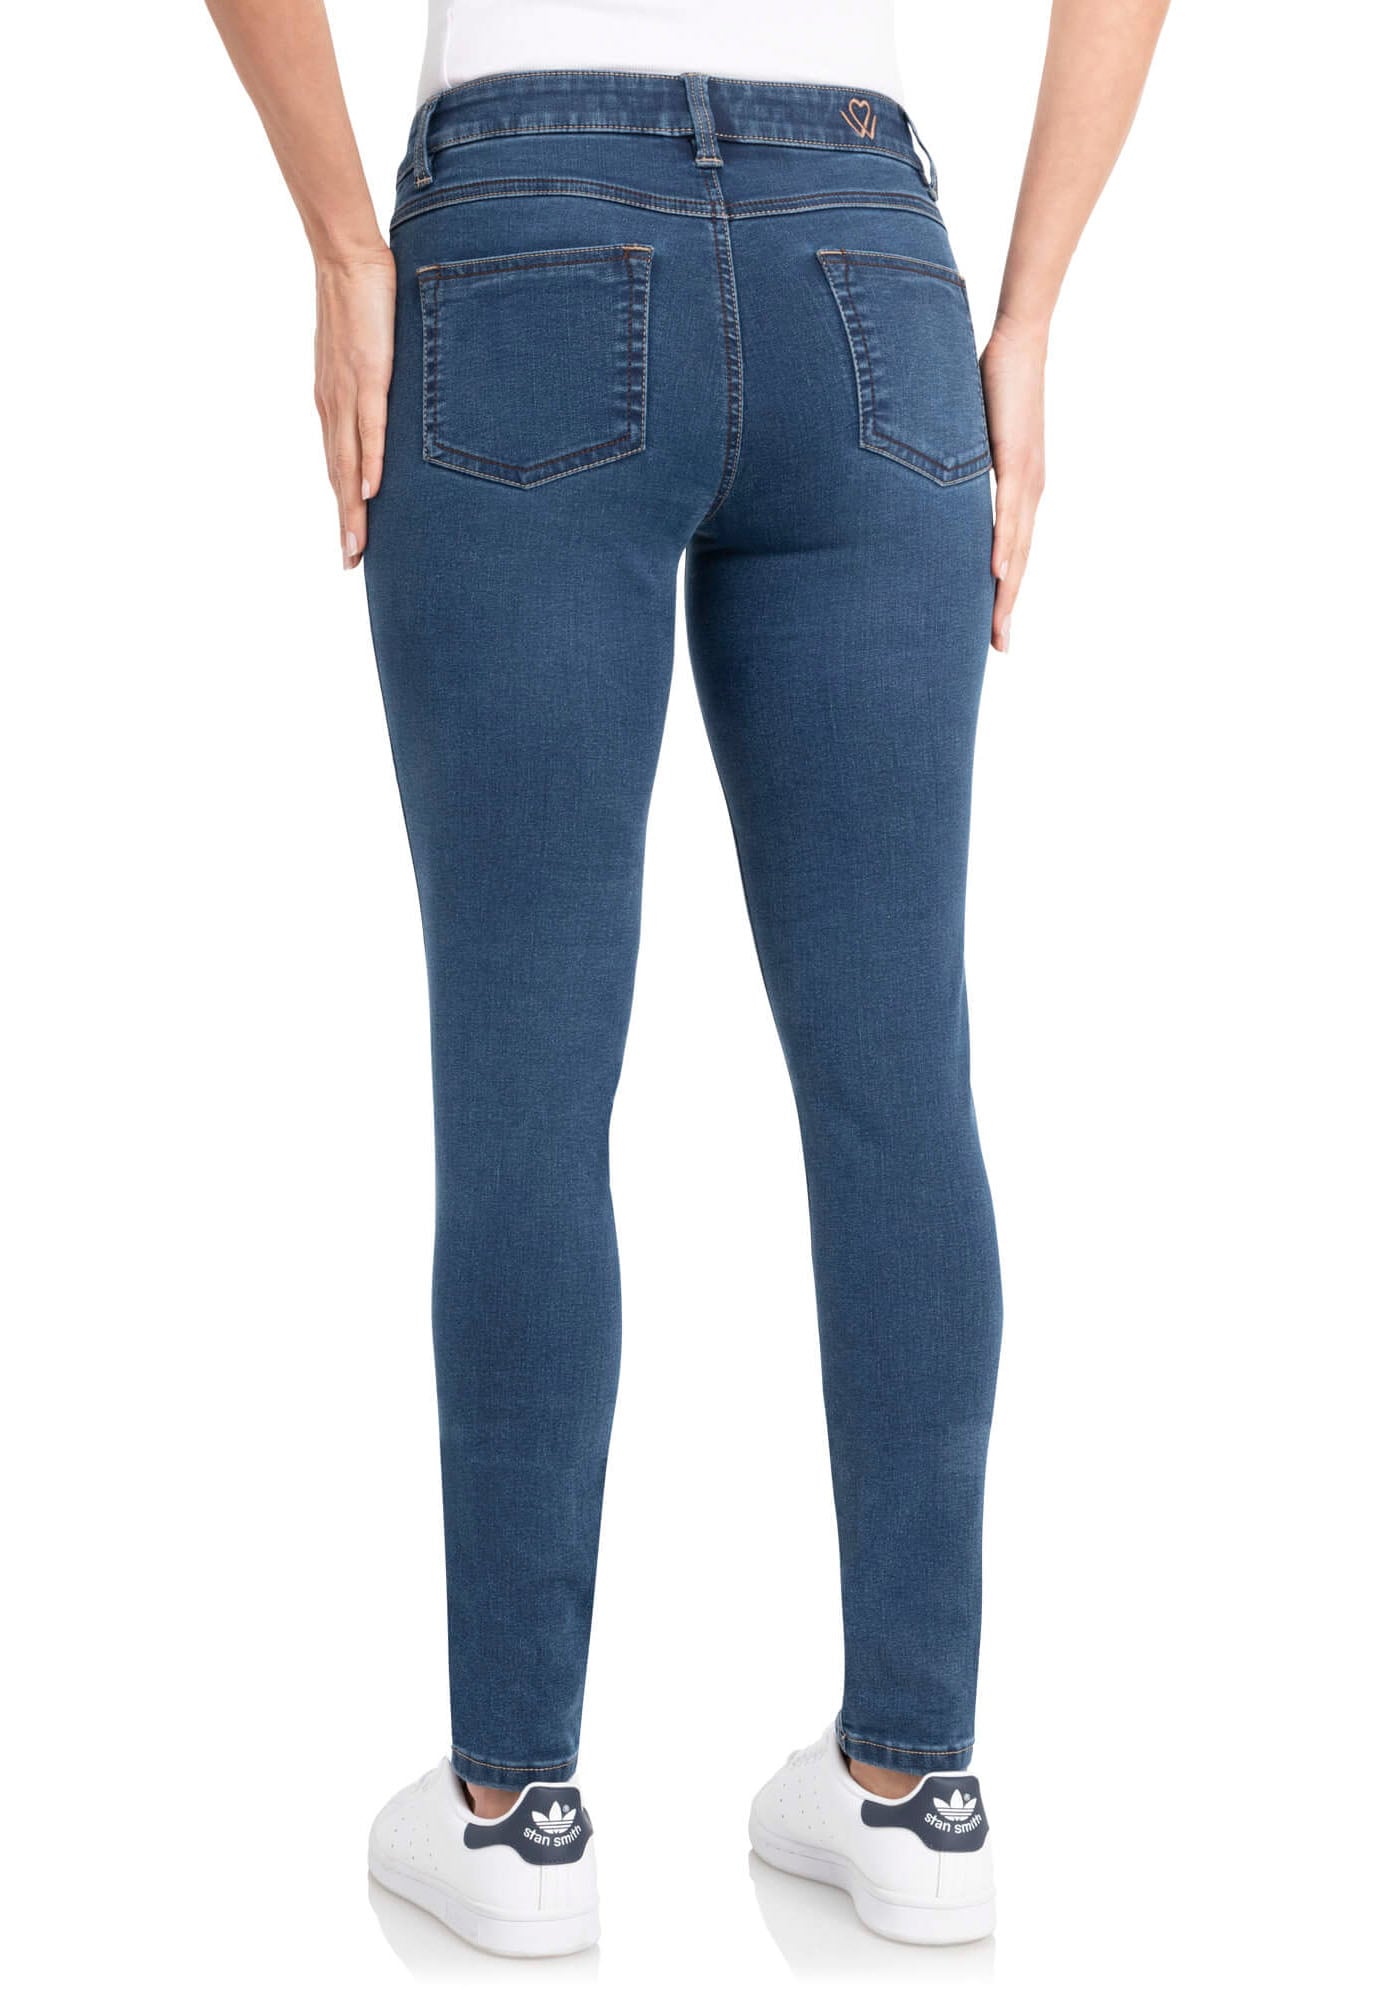 wonderjeans Skinny-fit-Jeans »Skinny-WS76-80«, Schmaler hochelastischer Qualität in Skinny-Fit